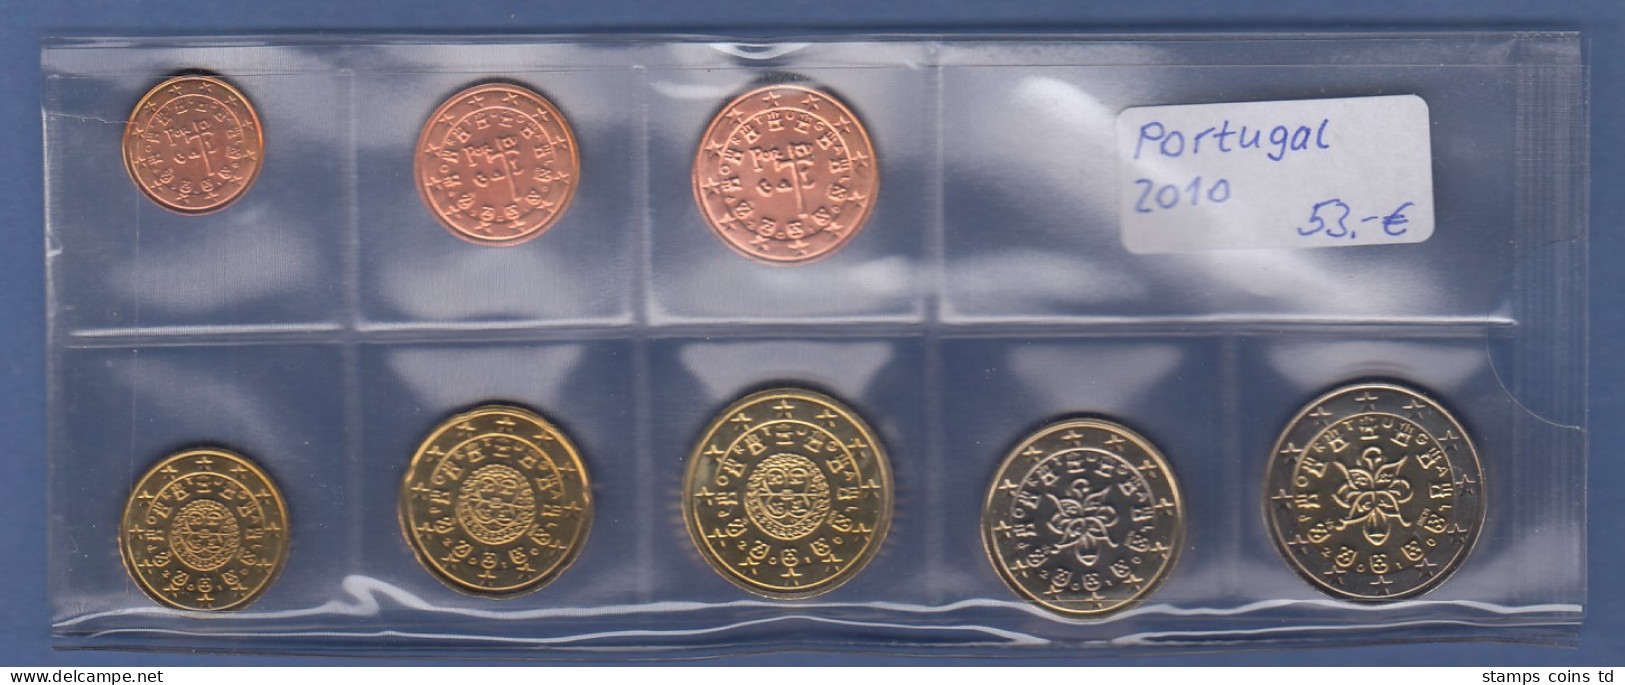 Portugal EURO-Kursmünzensatz Jahrgang 2010 Bankfrisch / Unzirkuliert - Portogallo